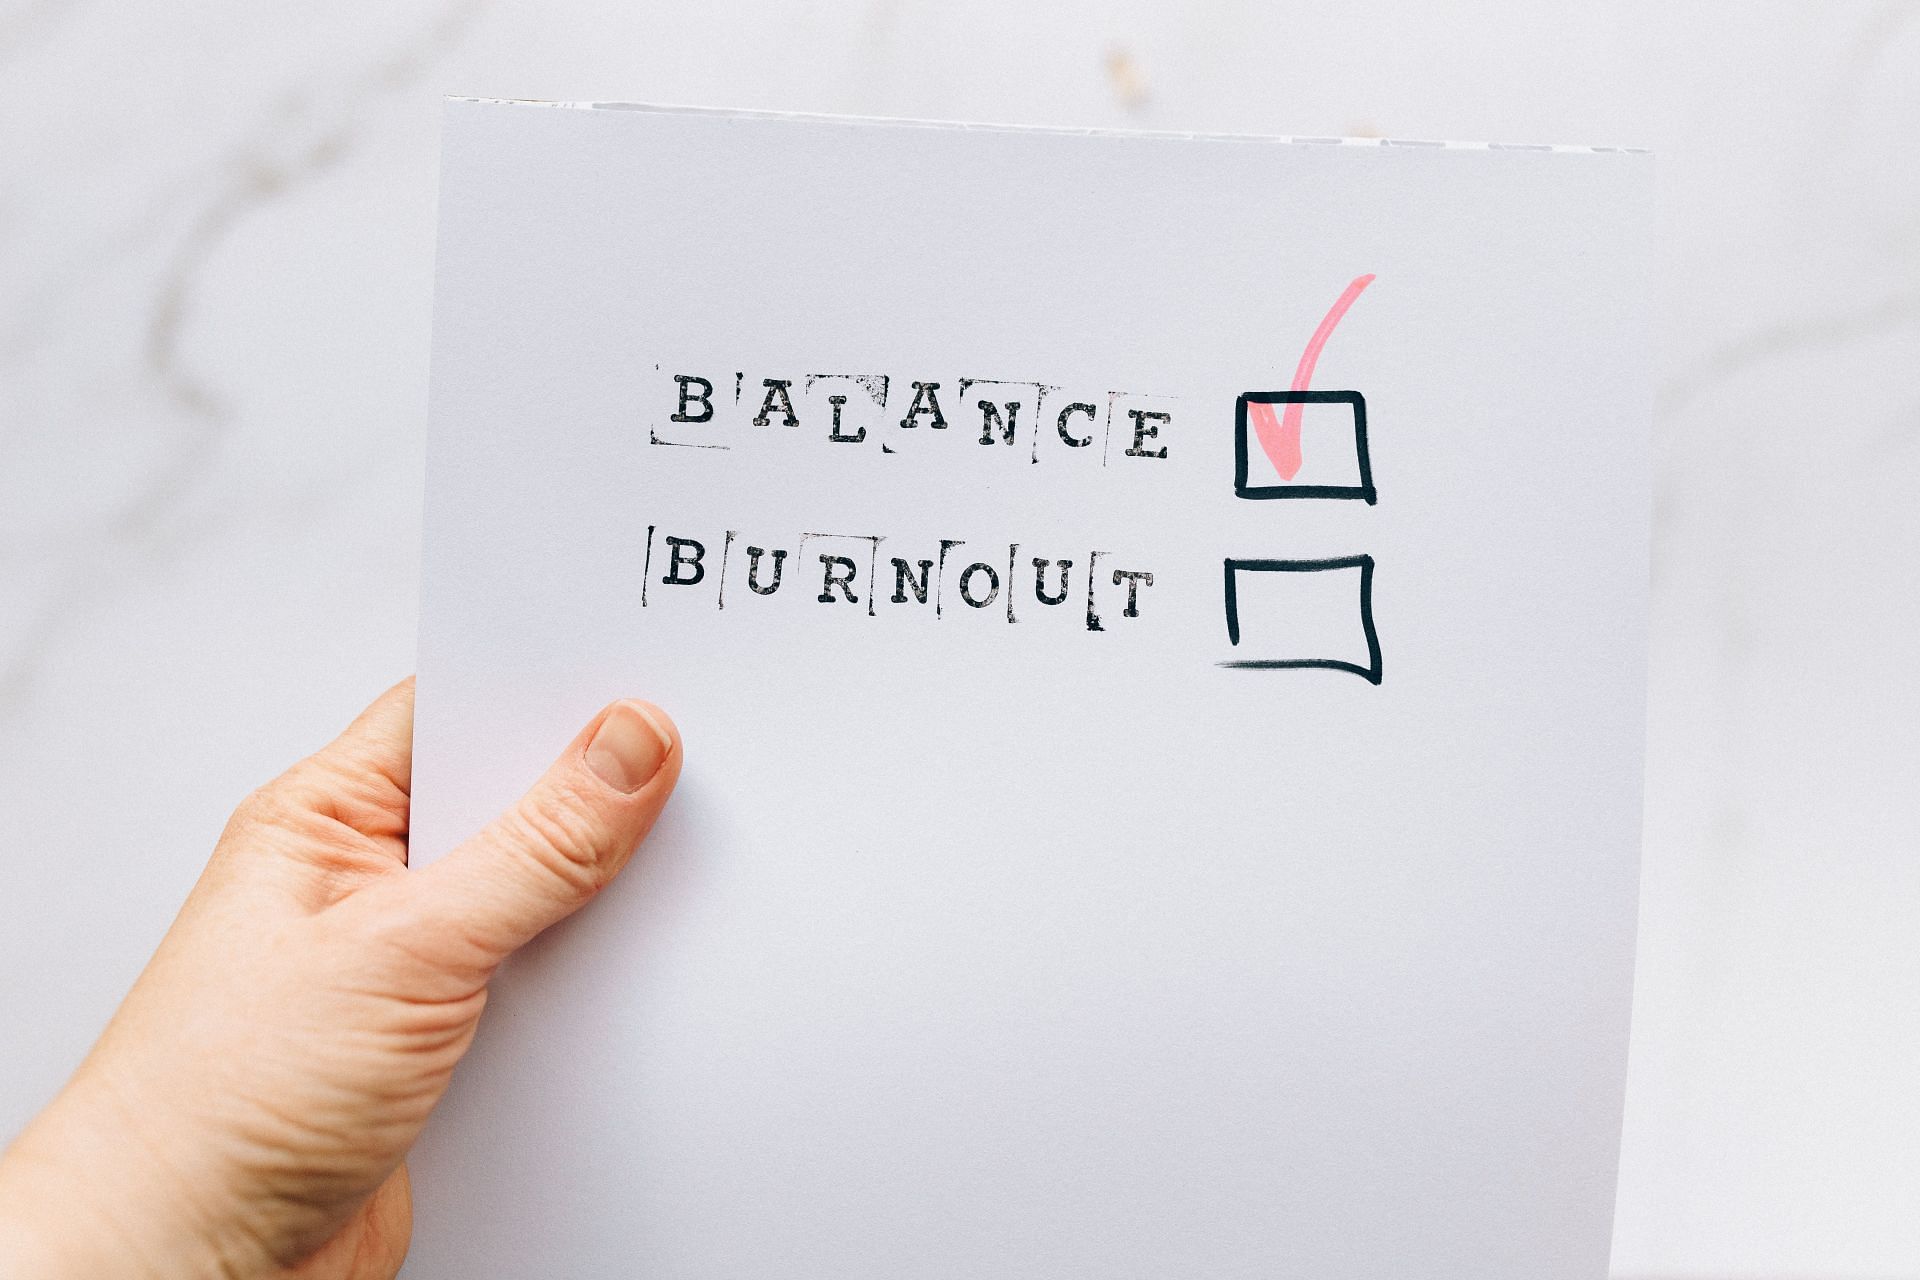 How can I manage my burnout? (Image via Pexels/Nataliya Vaitkevich)